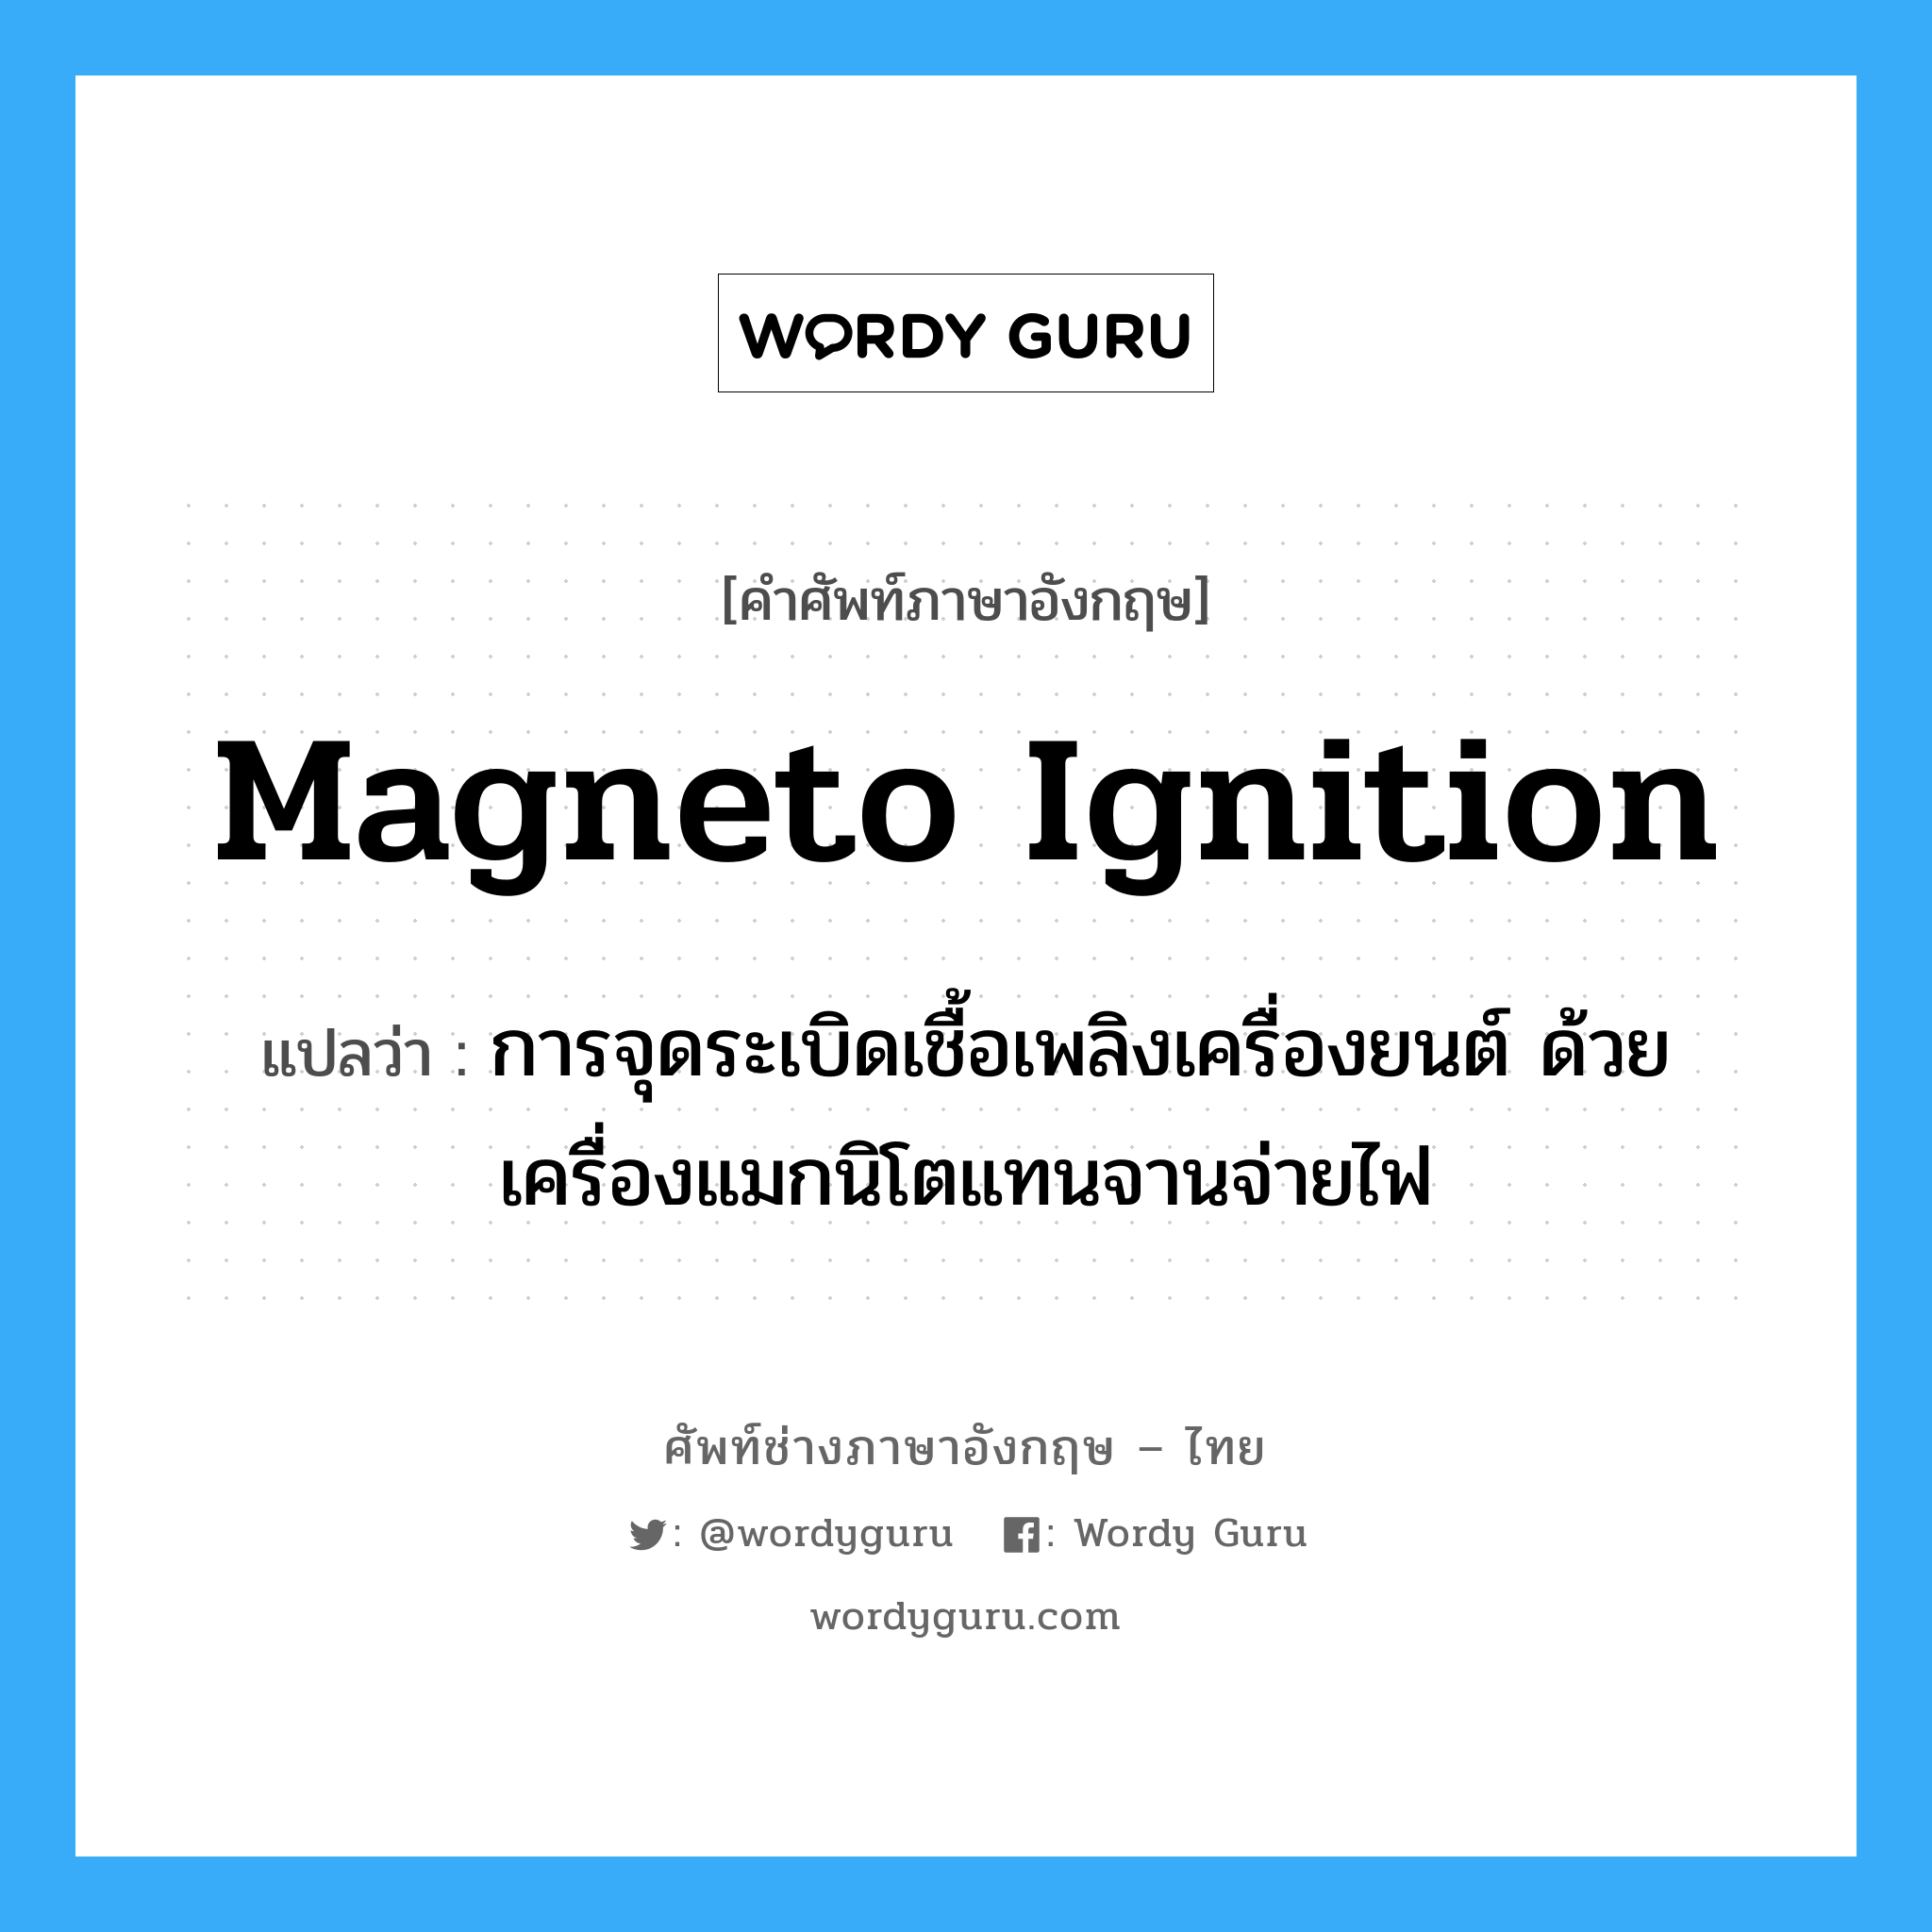 magneto ignition แปลว่า?, คำศัพท์ช่างภาษาอังกฤษ - ไทย magneto ignition คำศัพท์ภาษาอังกฤษ magneto ignition แปลว่า การจุดระเบิดเชื้อเพลิงเครื่องยนต์ ด้วยเครื่องแมกนิโตแทนจานจ่ายไฟ